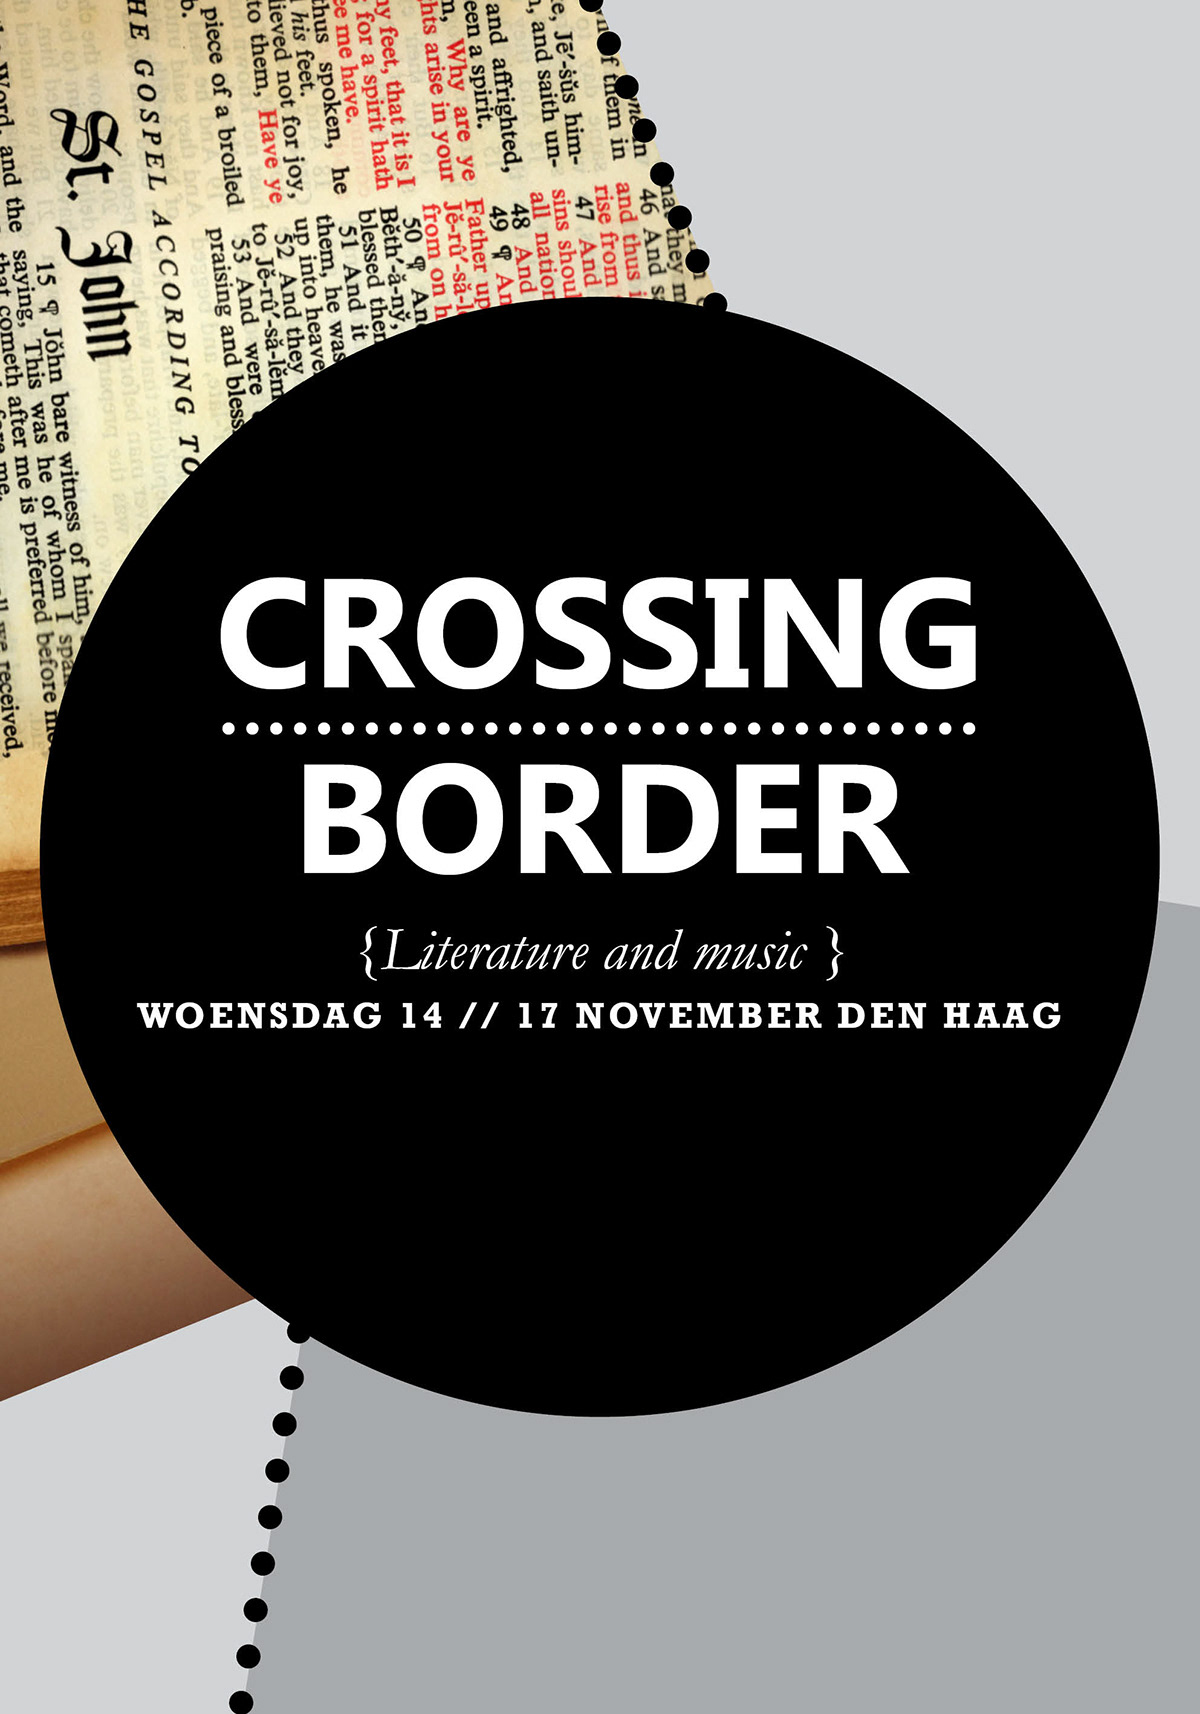 Crossing border